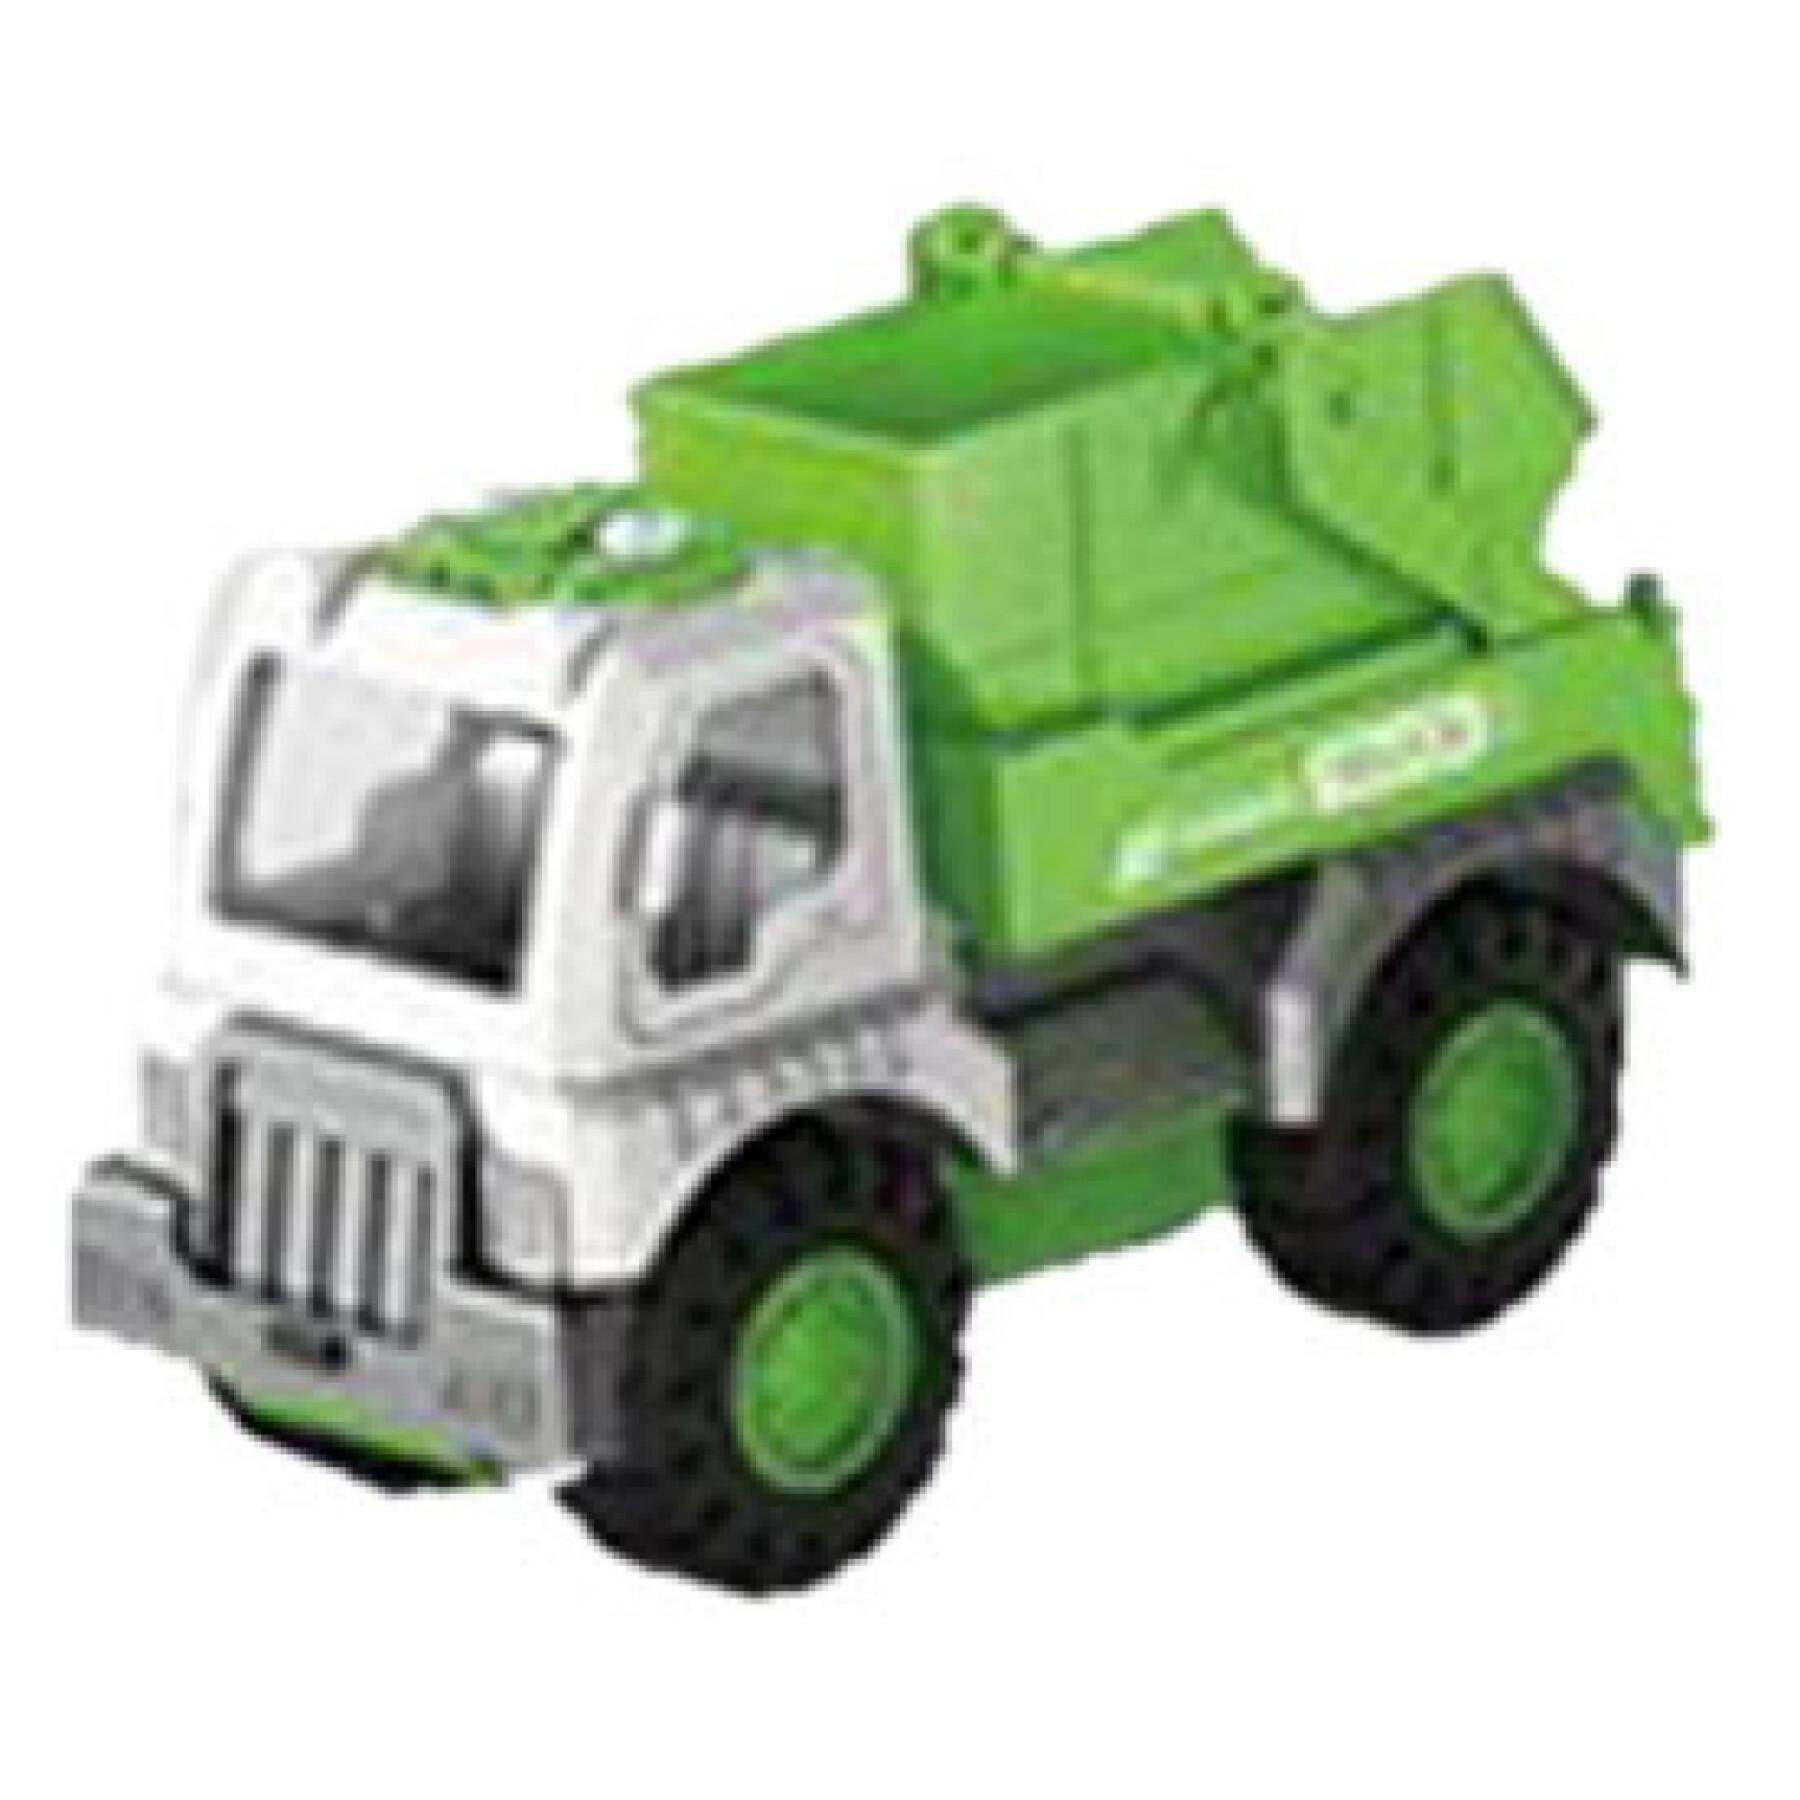 Recycling friction truck 4 models Fantastiko